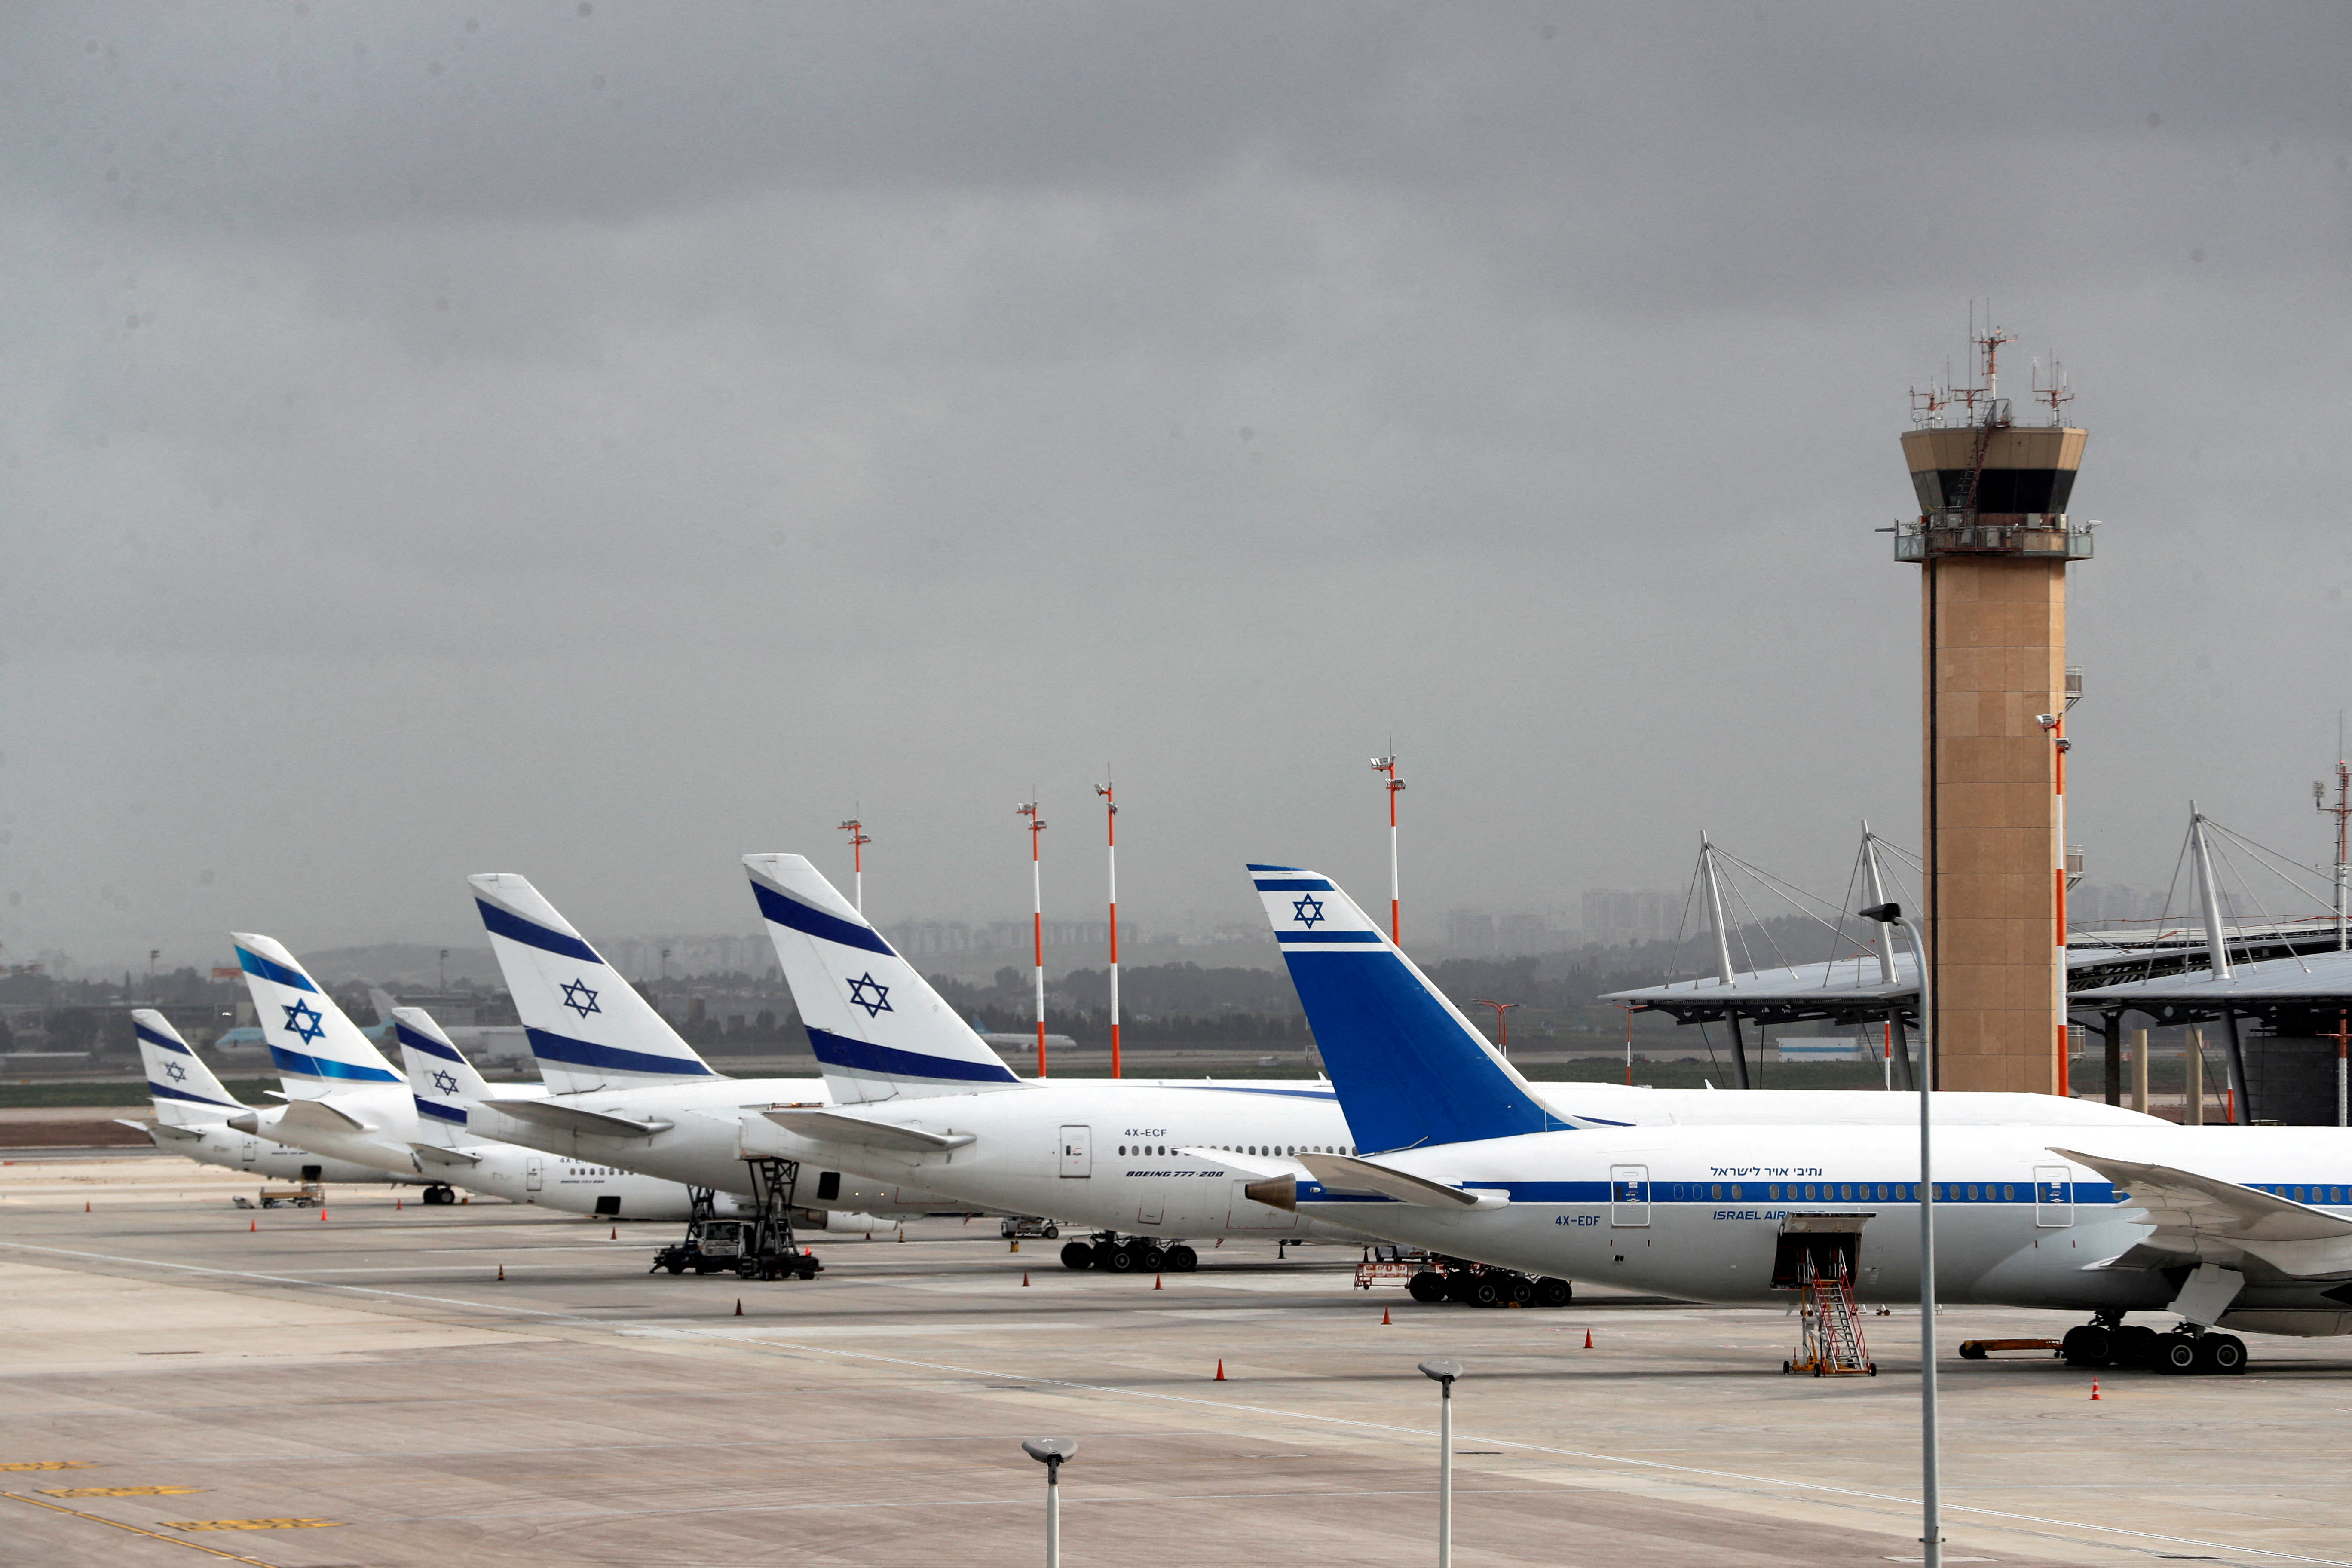 El Al Israel Airlines planes are seen on the tarmac at Ben Gurion International airport in Lod, near Tel Aviv, Israel